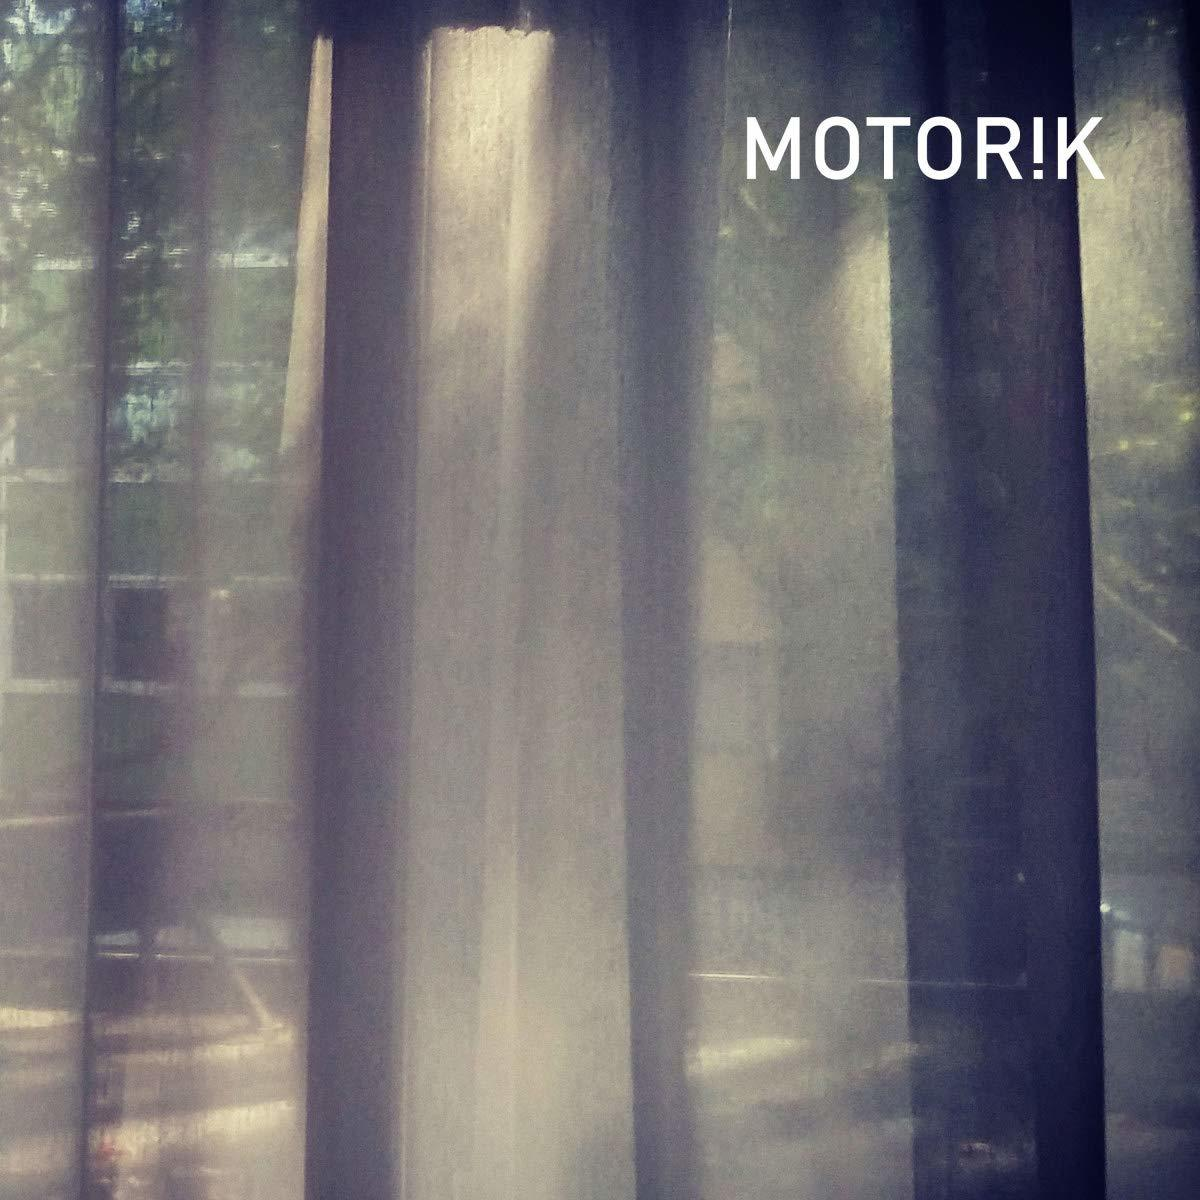 Motor!k - Motor!k (LP+CD) - Bonus-CD) (LP 